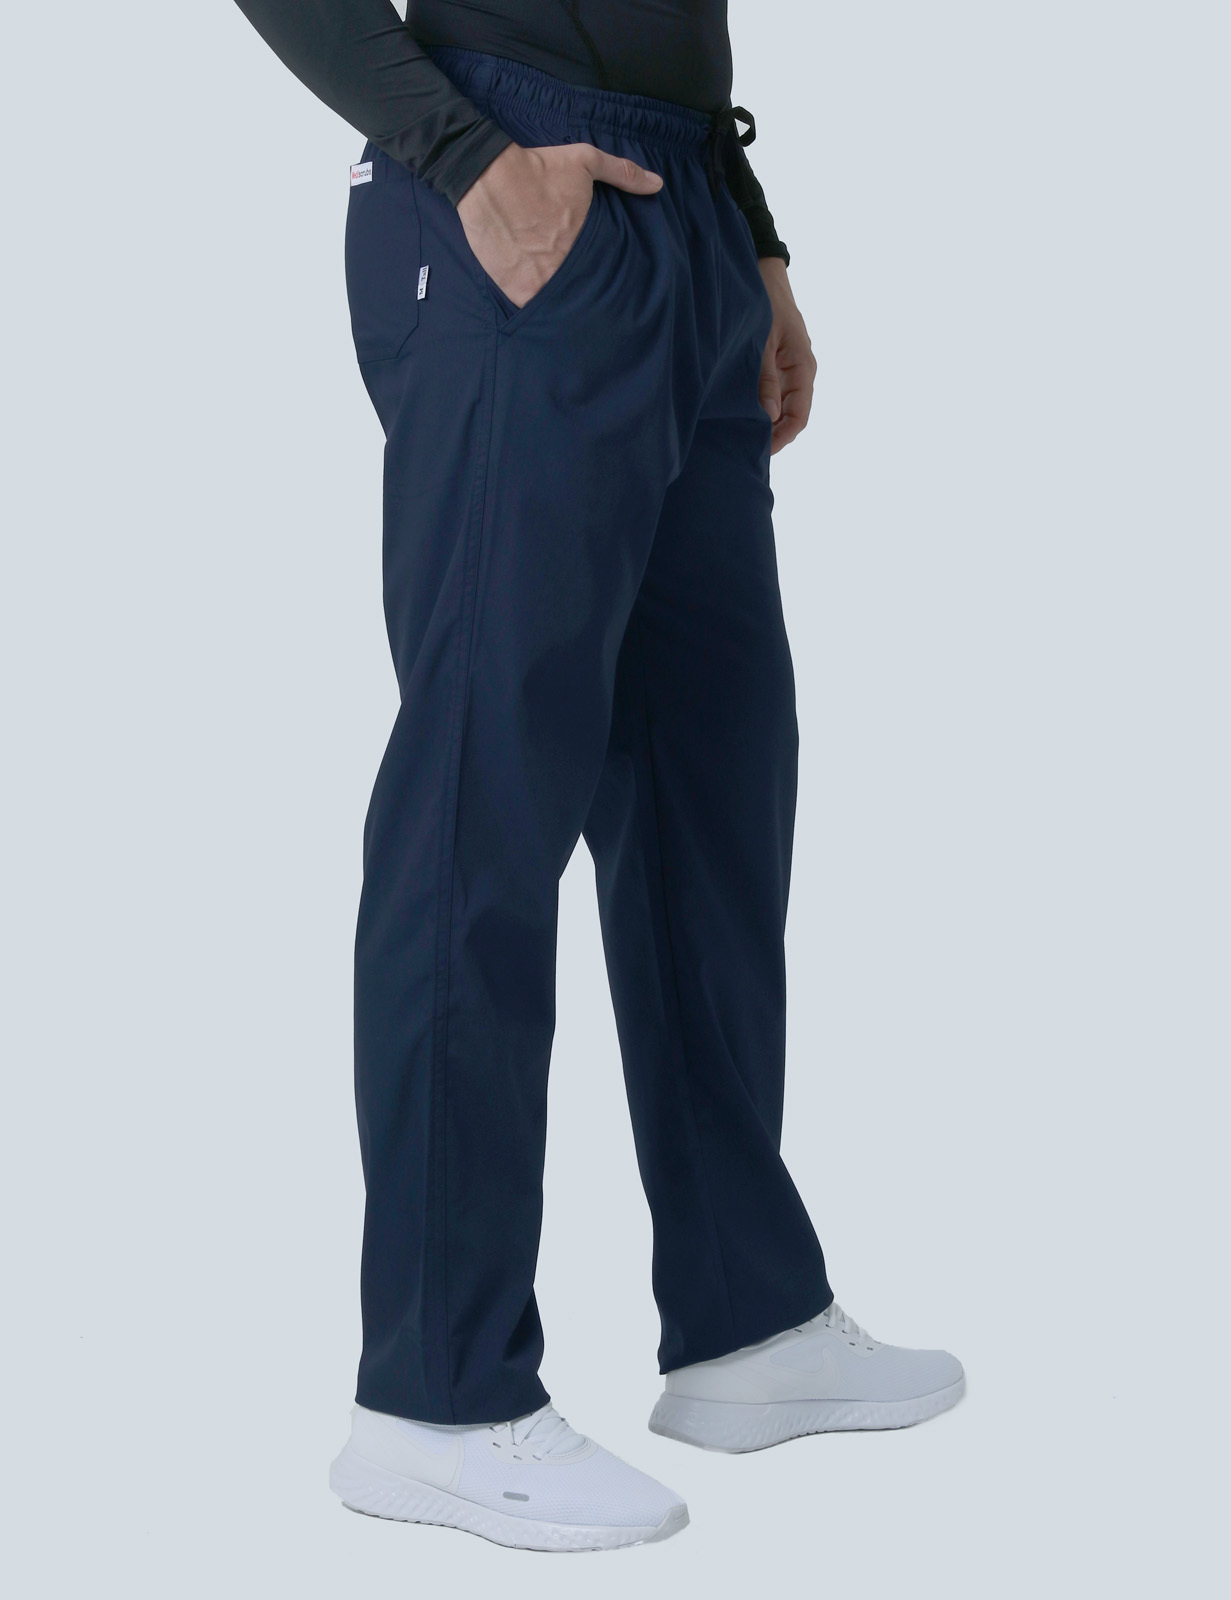 Men's Regular Cut Pants - Navy - X Small